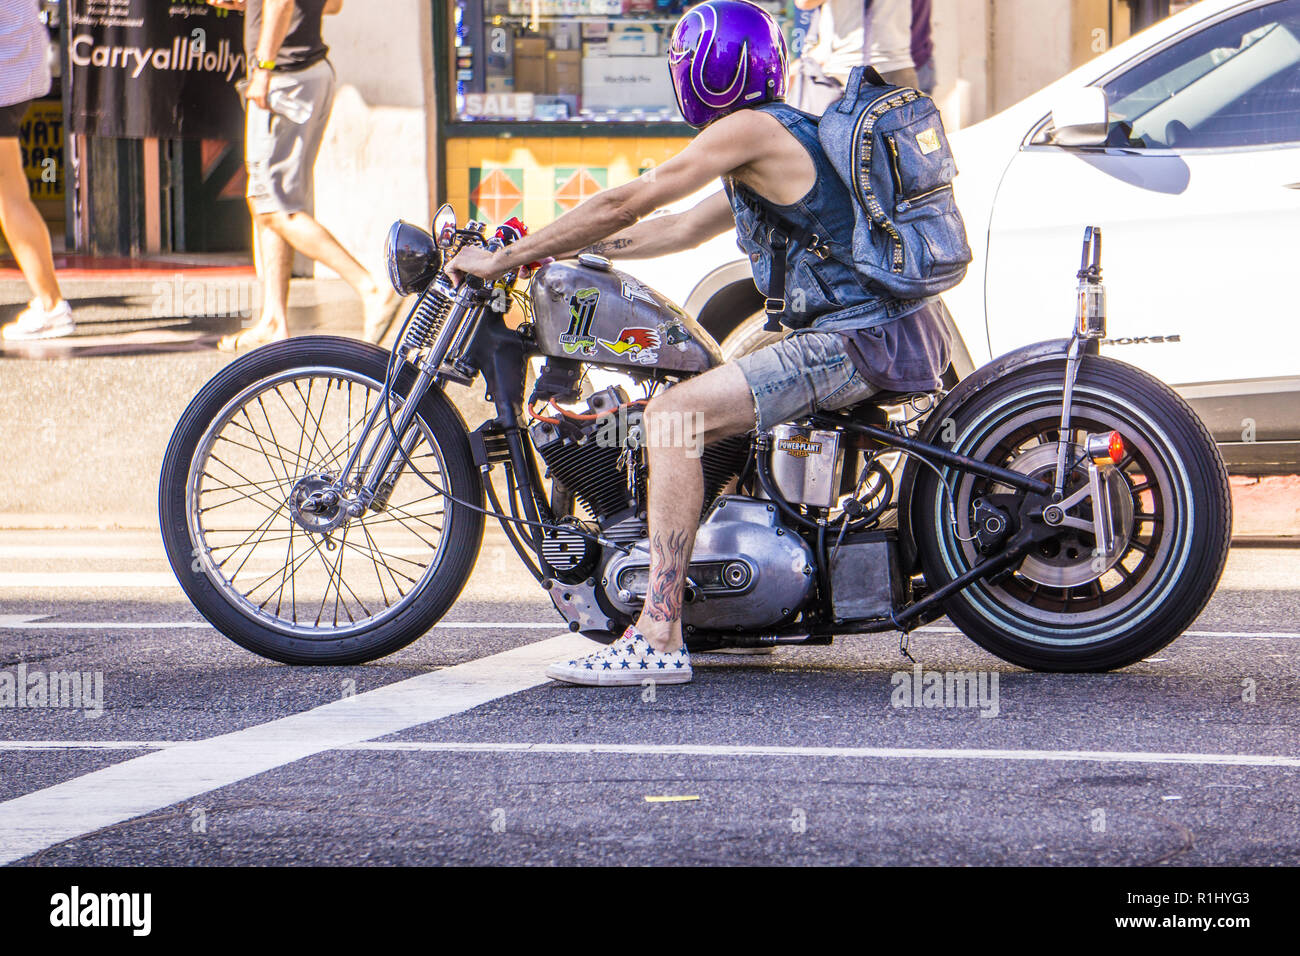 A custom motorcycle in California Stock Photo